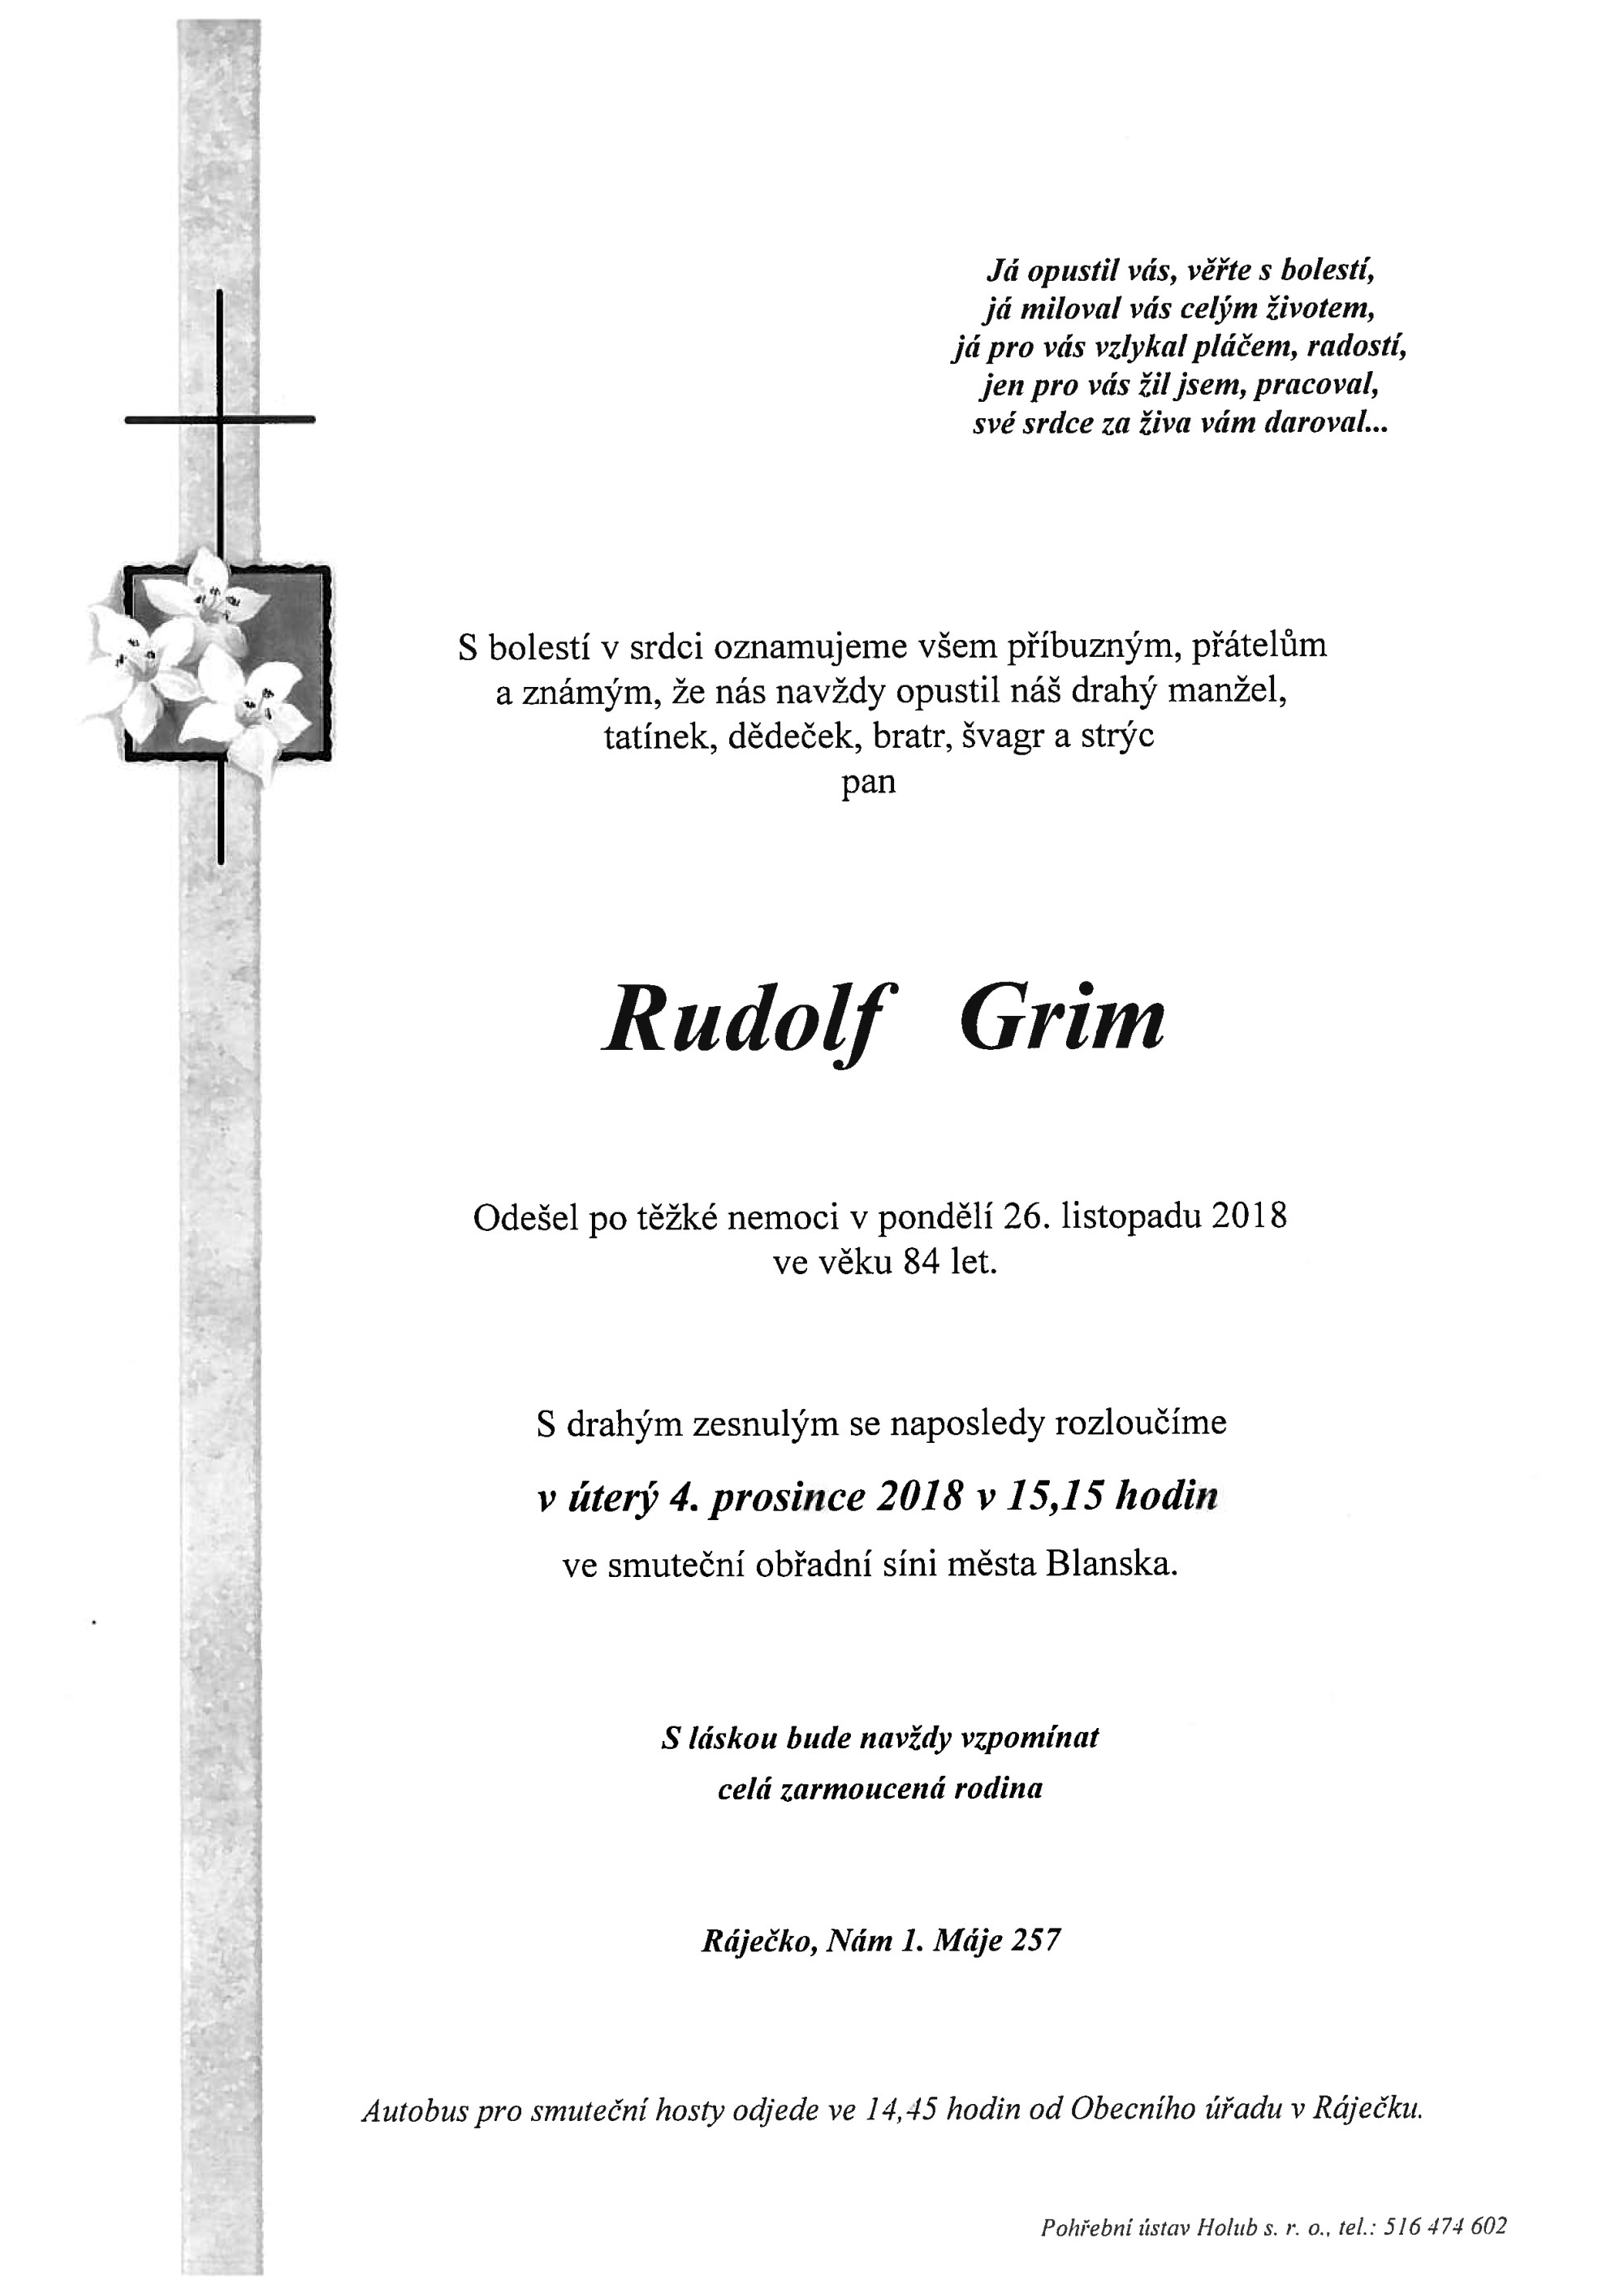 Rudolf Grim